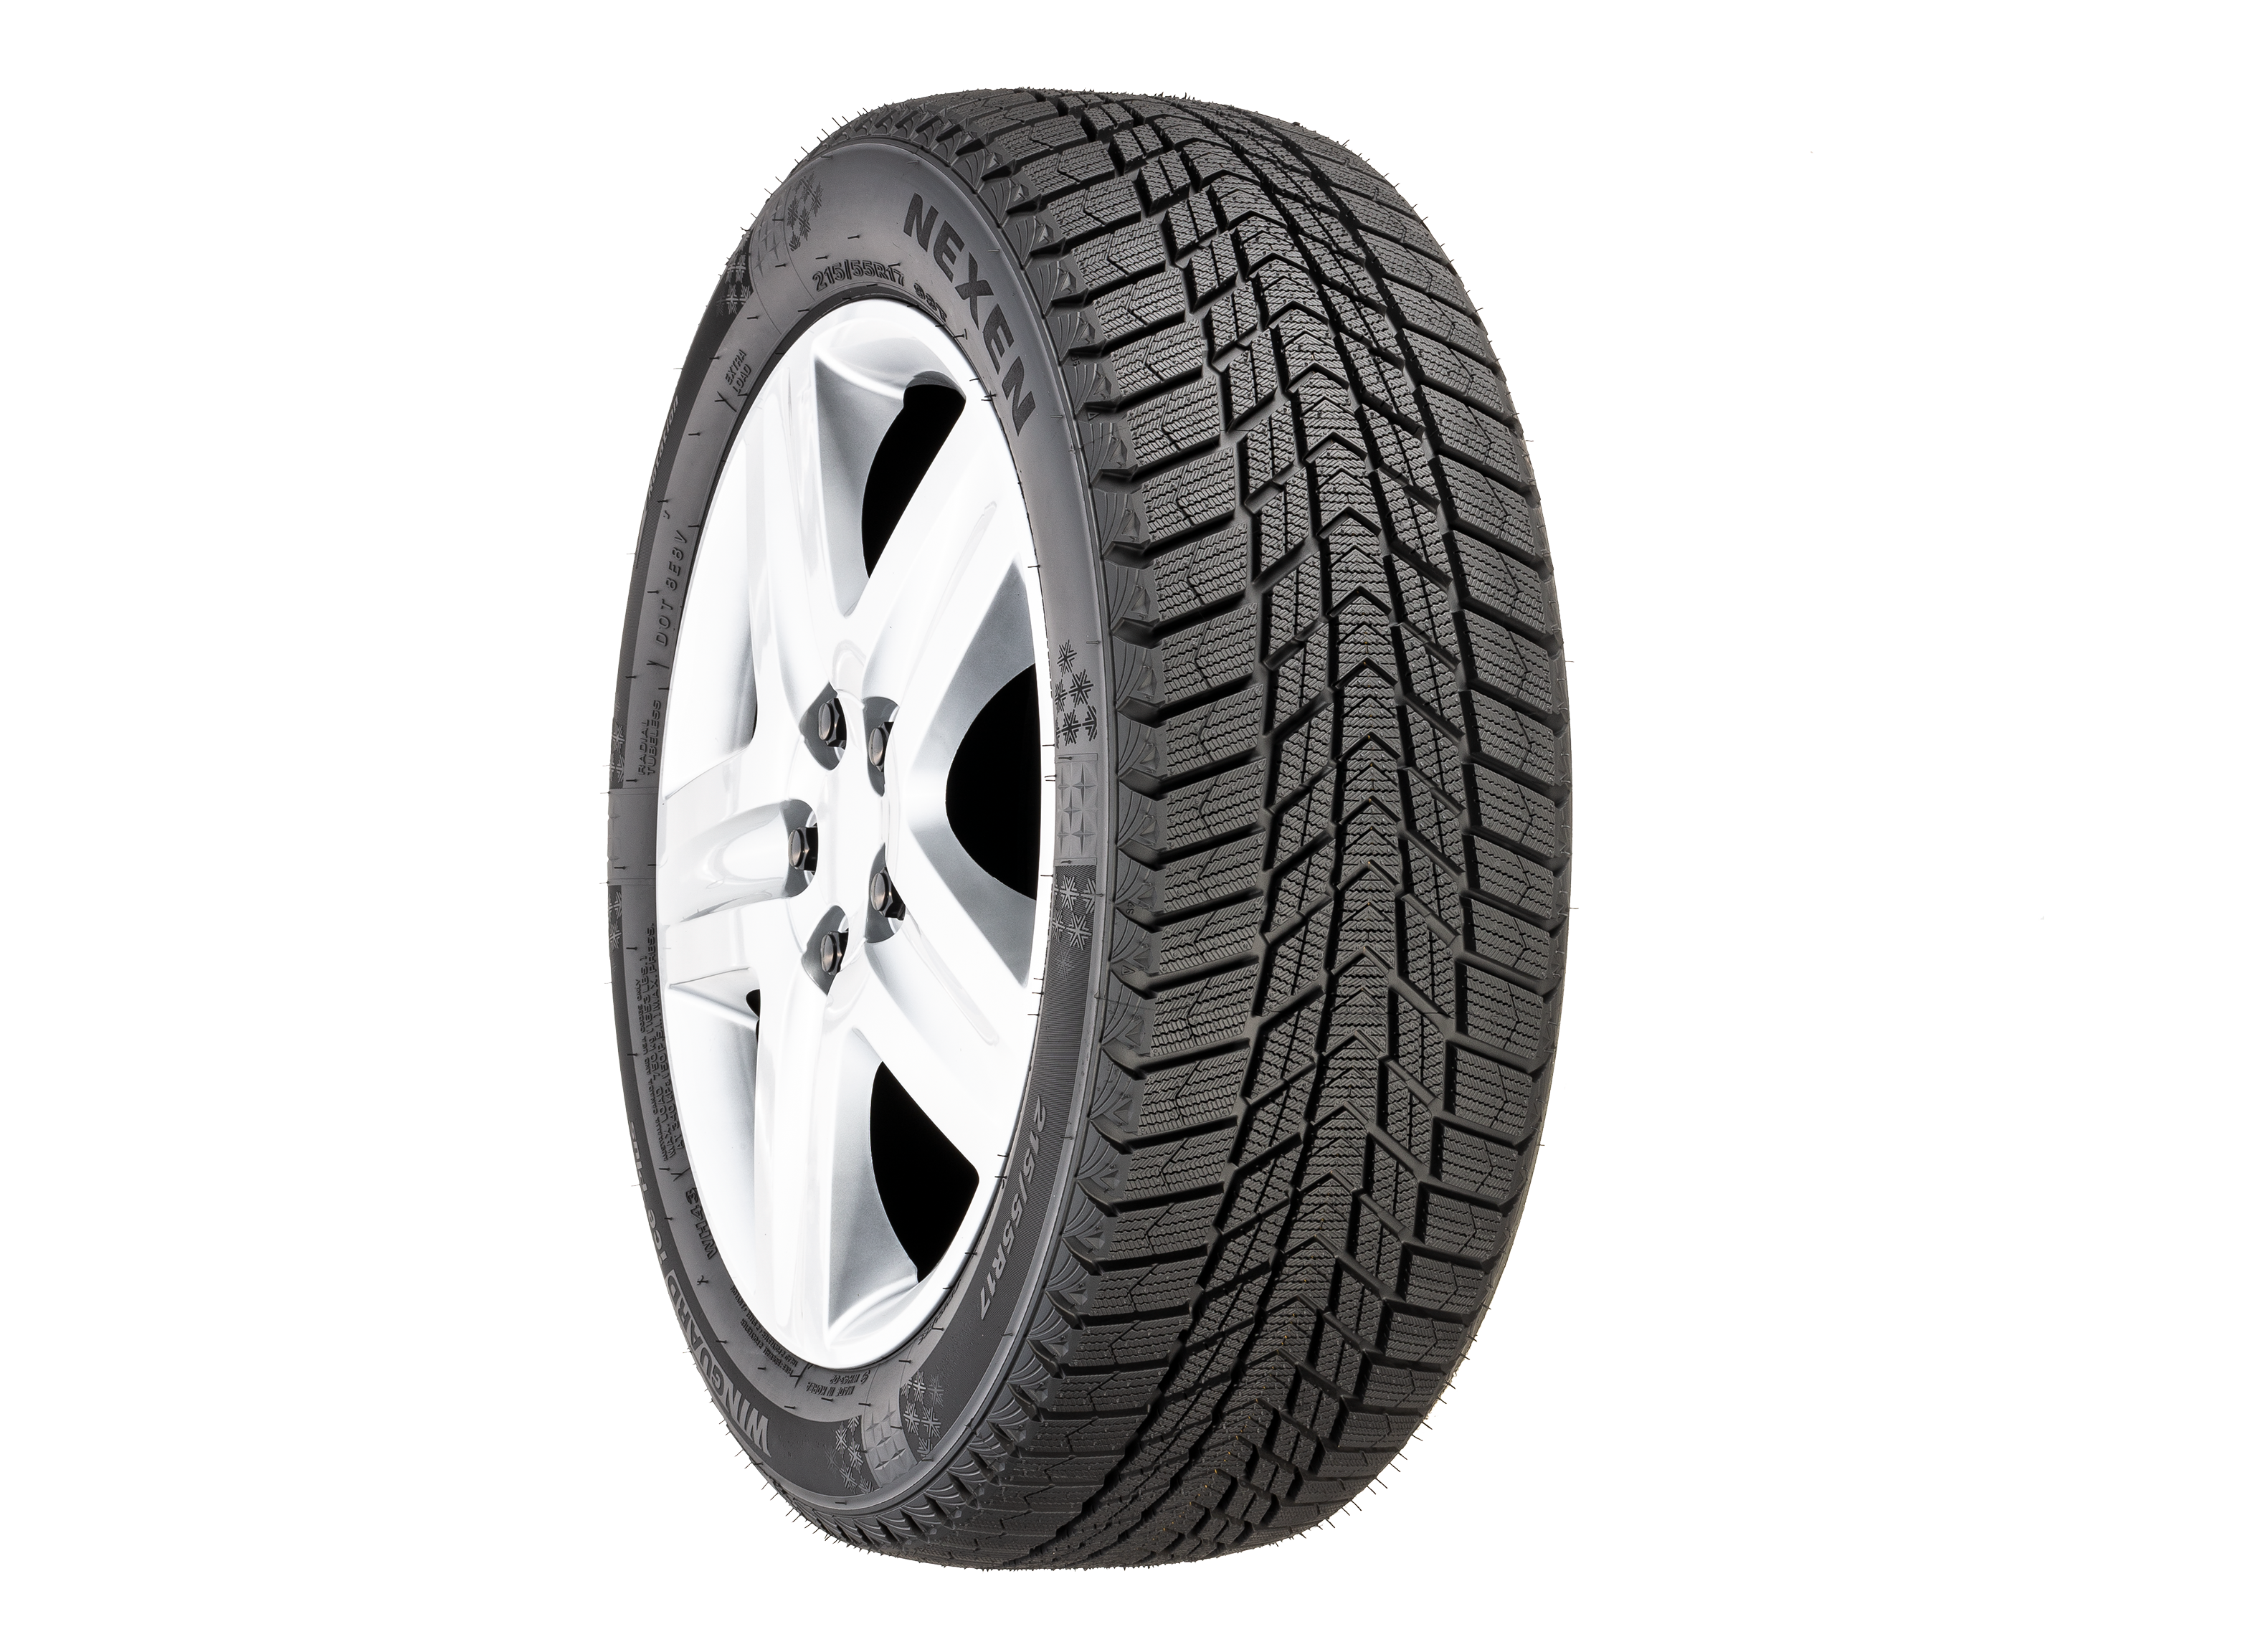 Nexen Winguard ice Plus Tire Review - Consumer Reports